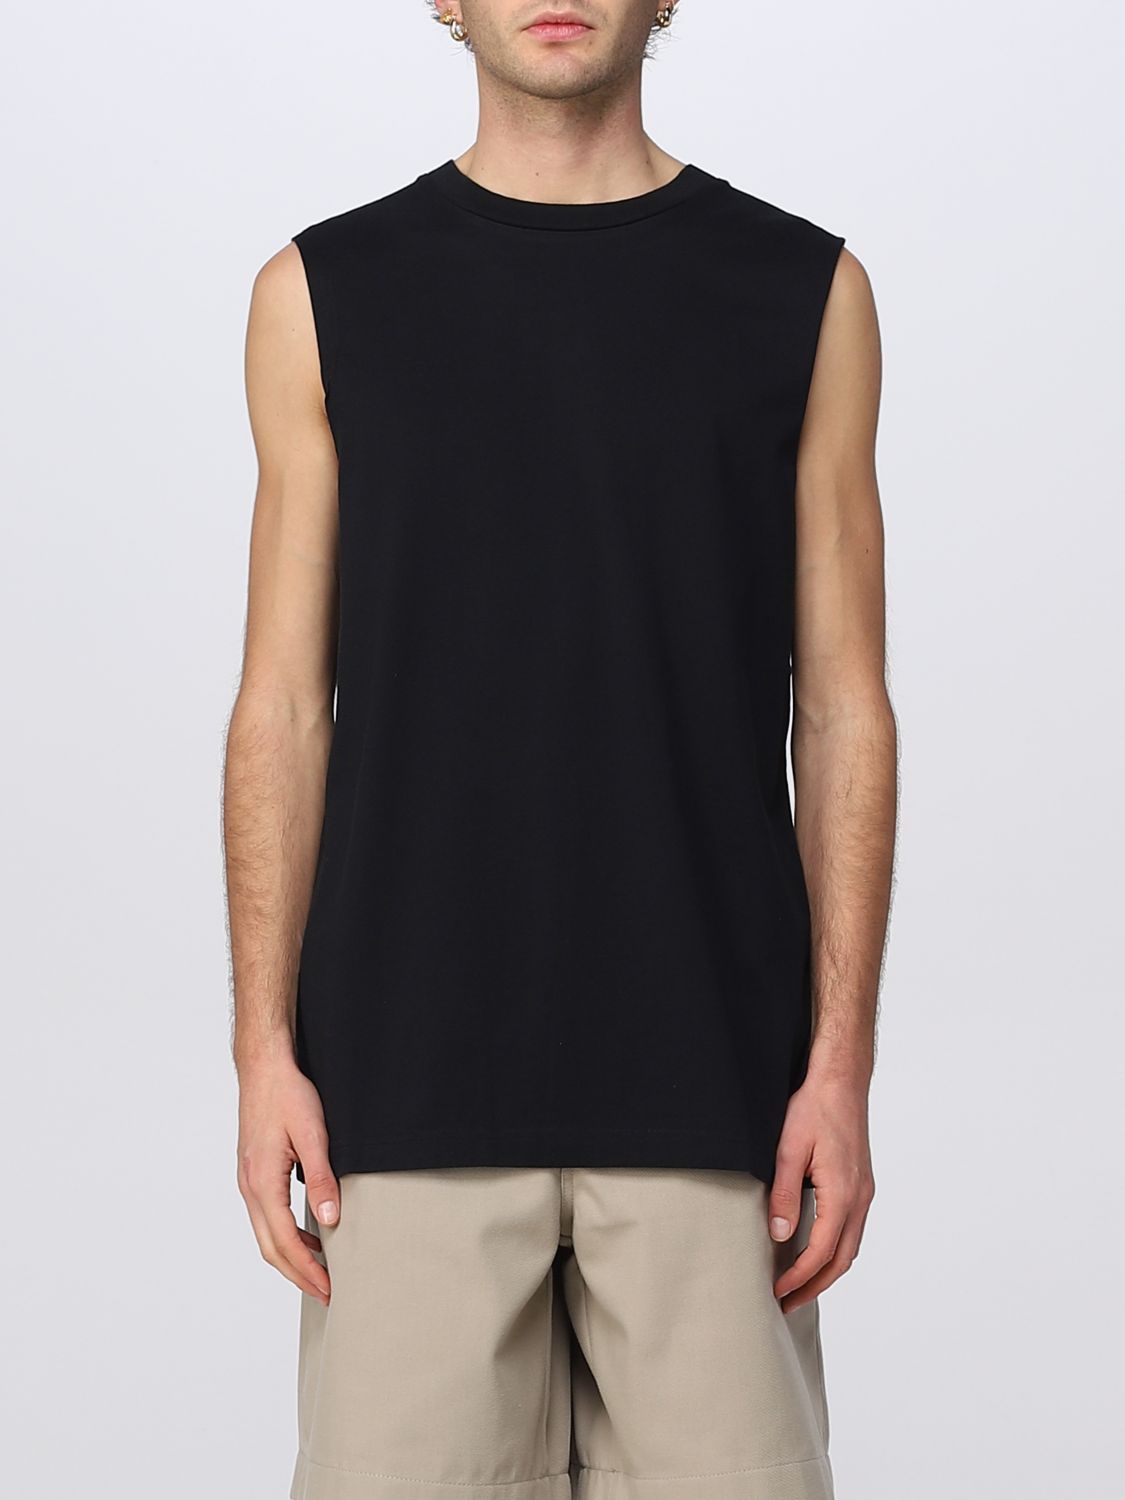 ACNE STUDIOS: t-shirt for man - Black | Acne Studios t-shirt CL0199 ...